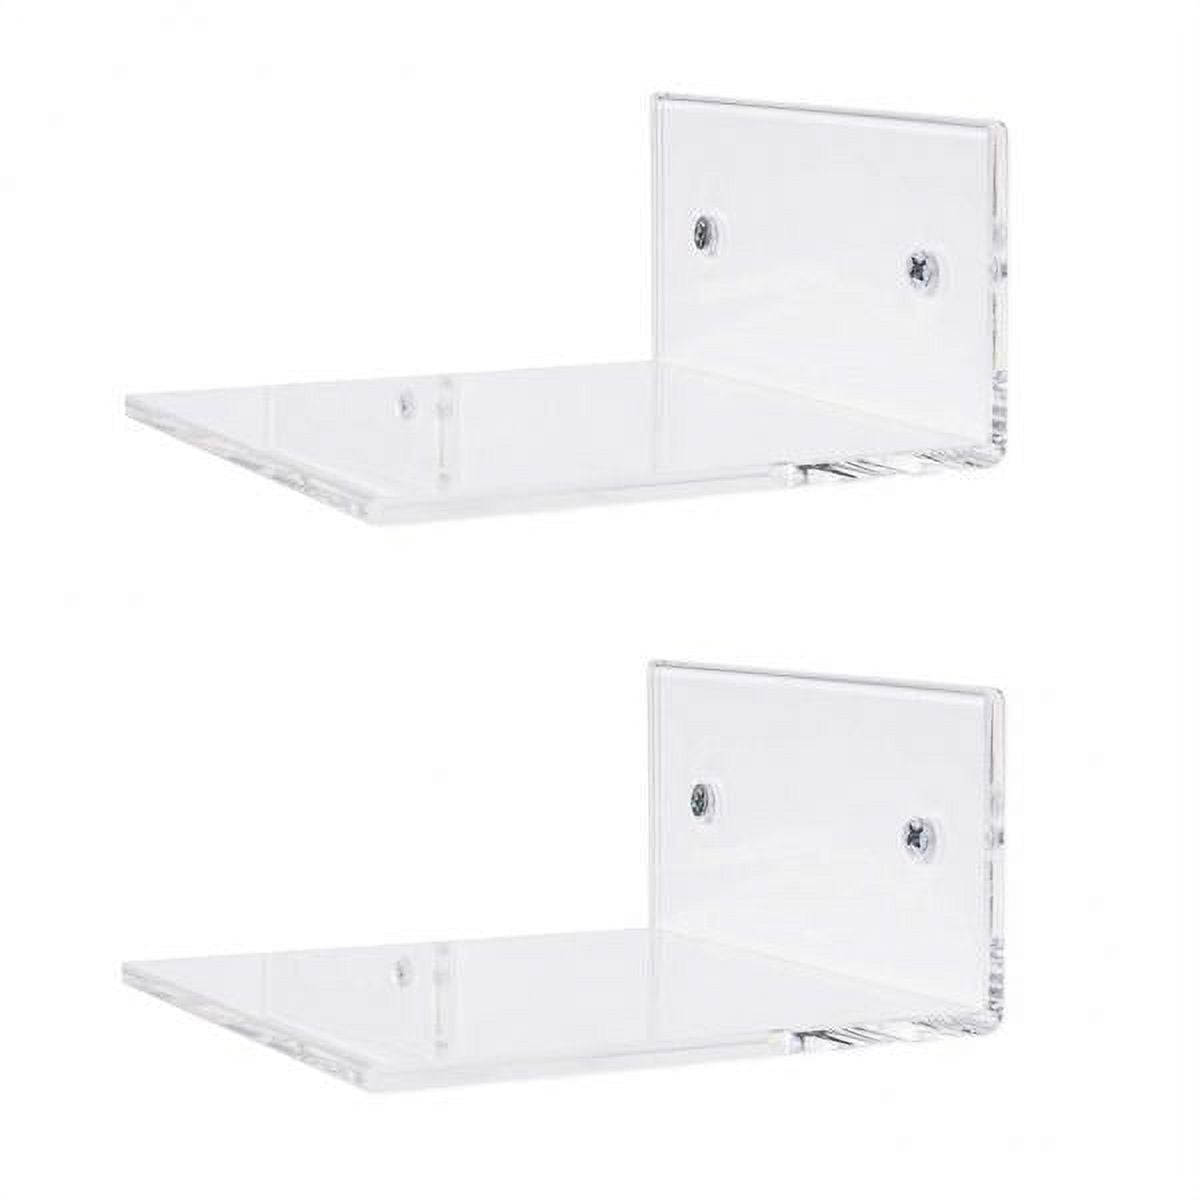 2PCS Acrylic Wall Shelf Adhesive Floating Shelves Storage Rack with Cable  Hole